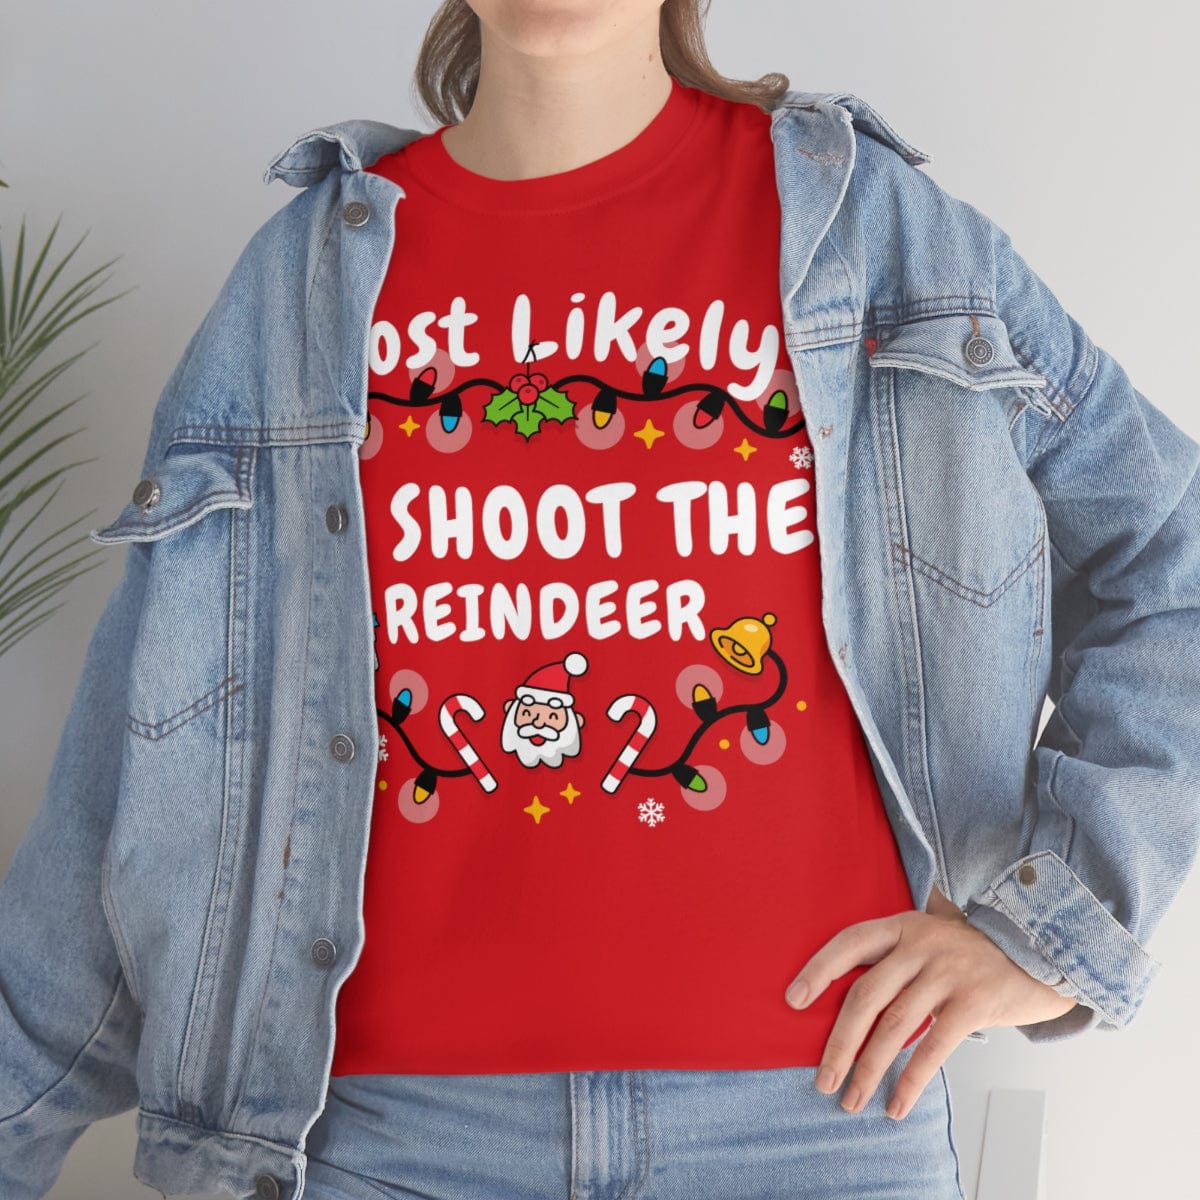 TO SHOOT THE REINDEER